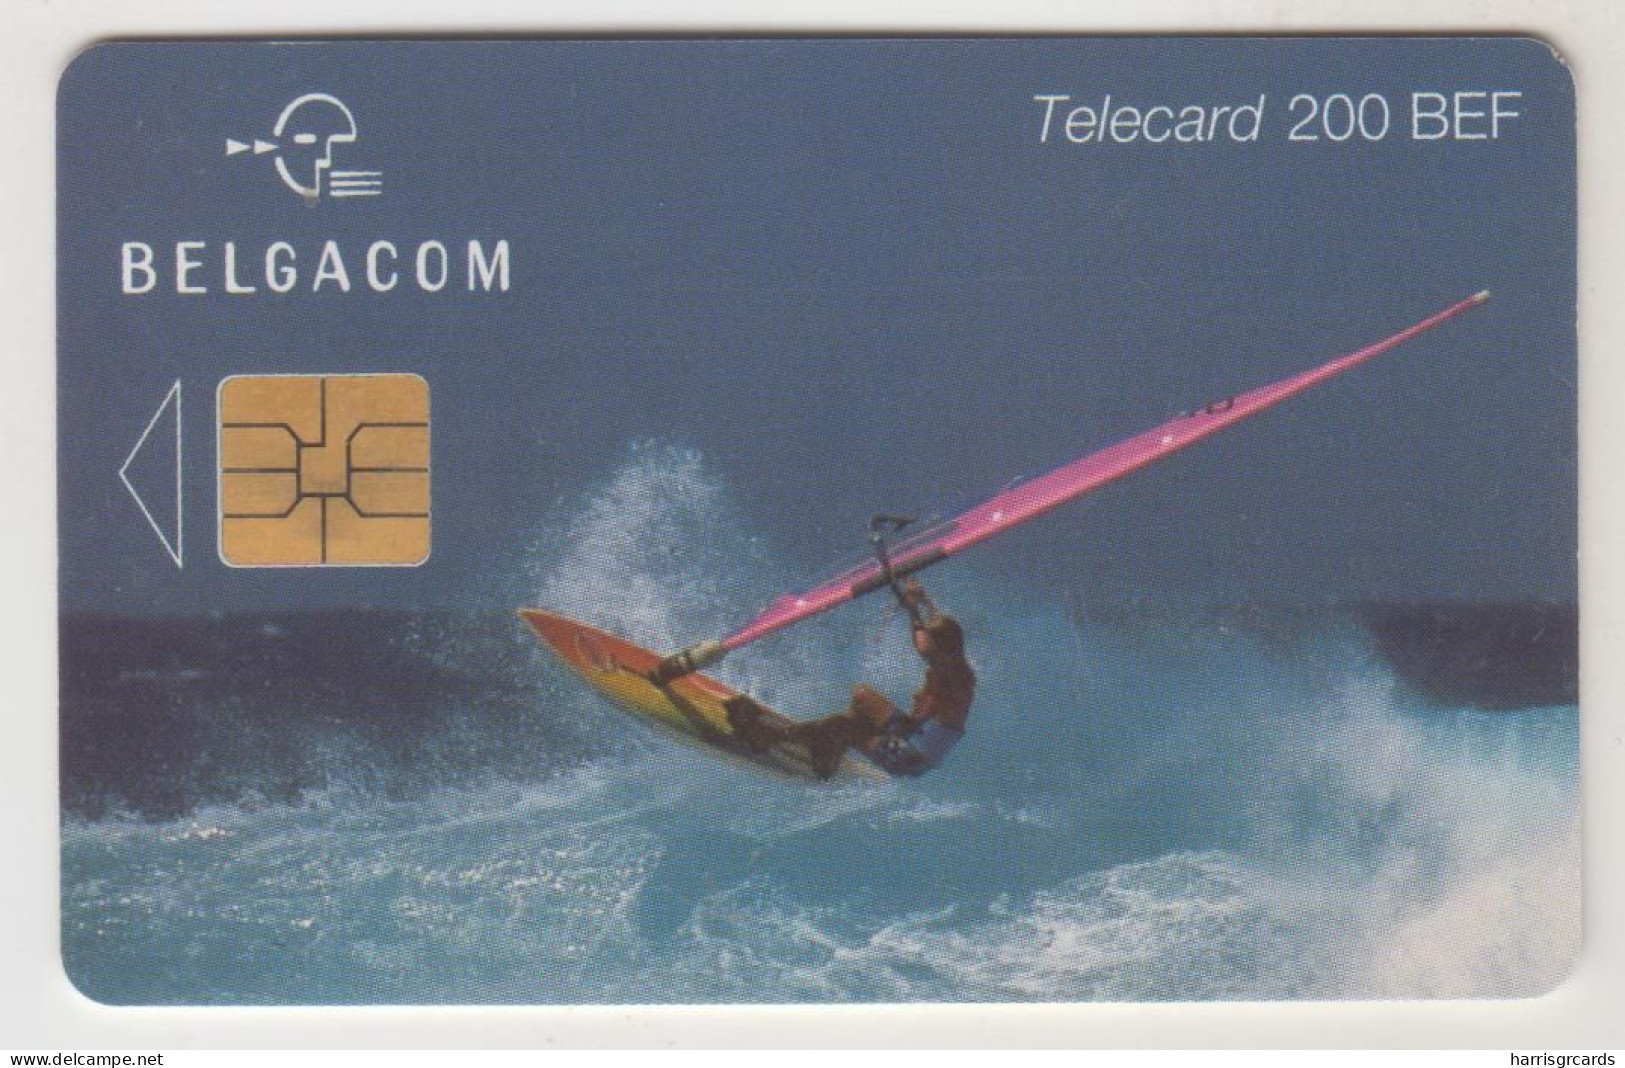 BELGIUM - Surfer, 200 BEF, Tirage 150.000, Used - Con Chip